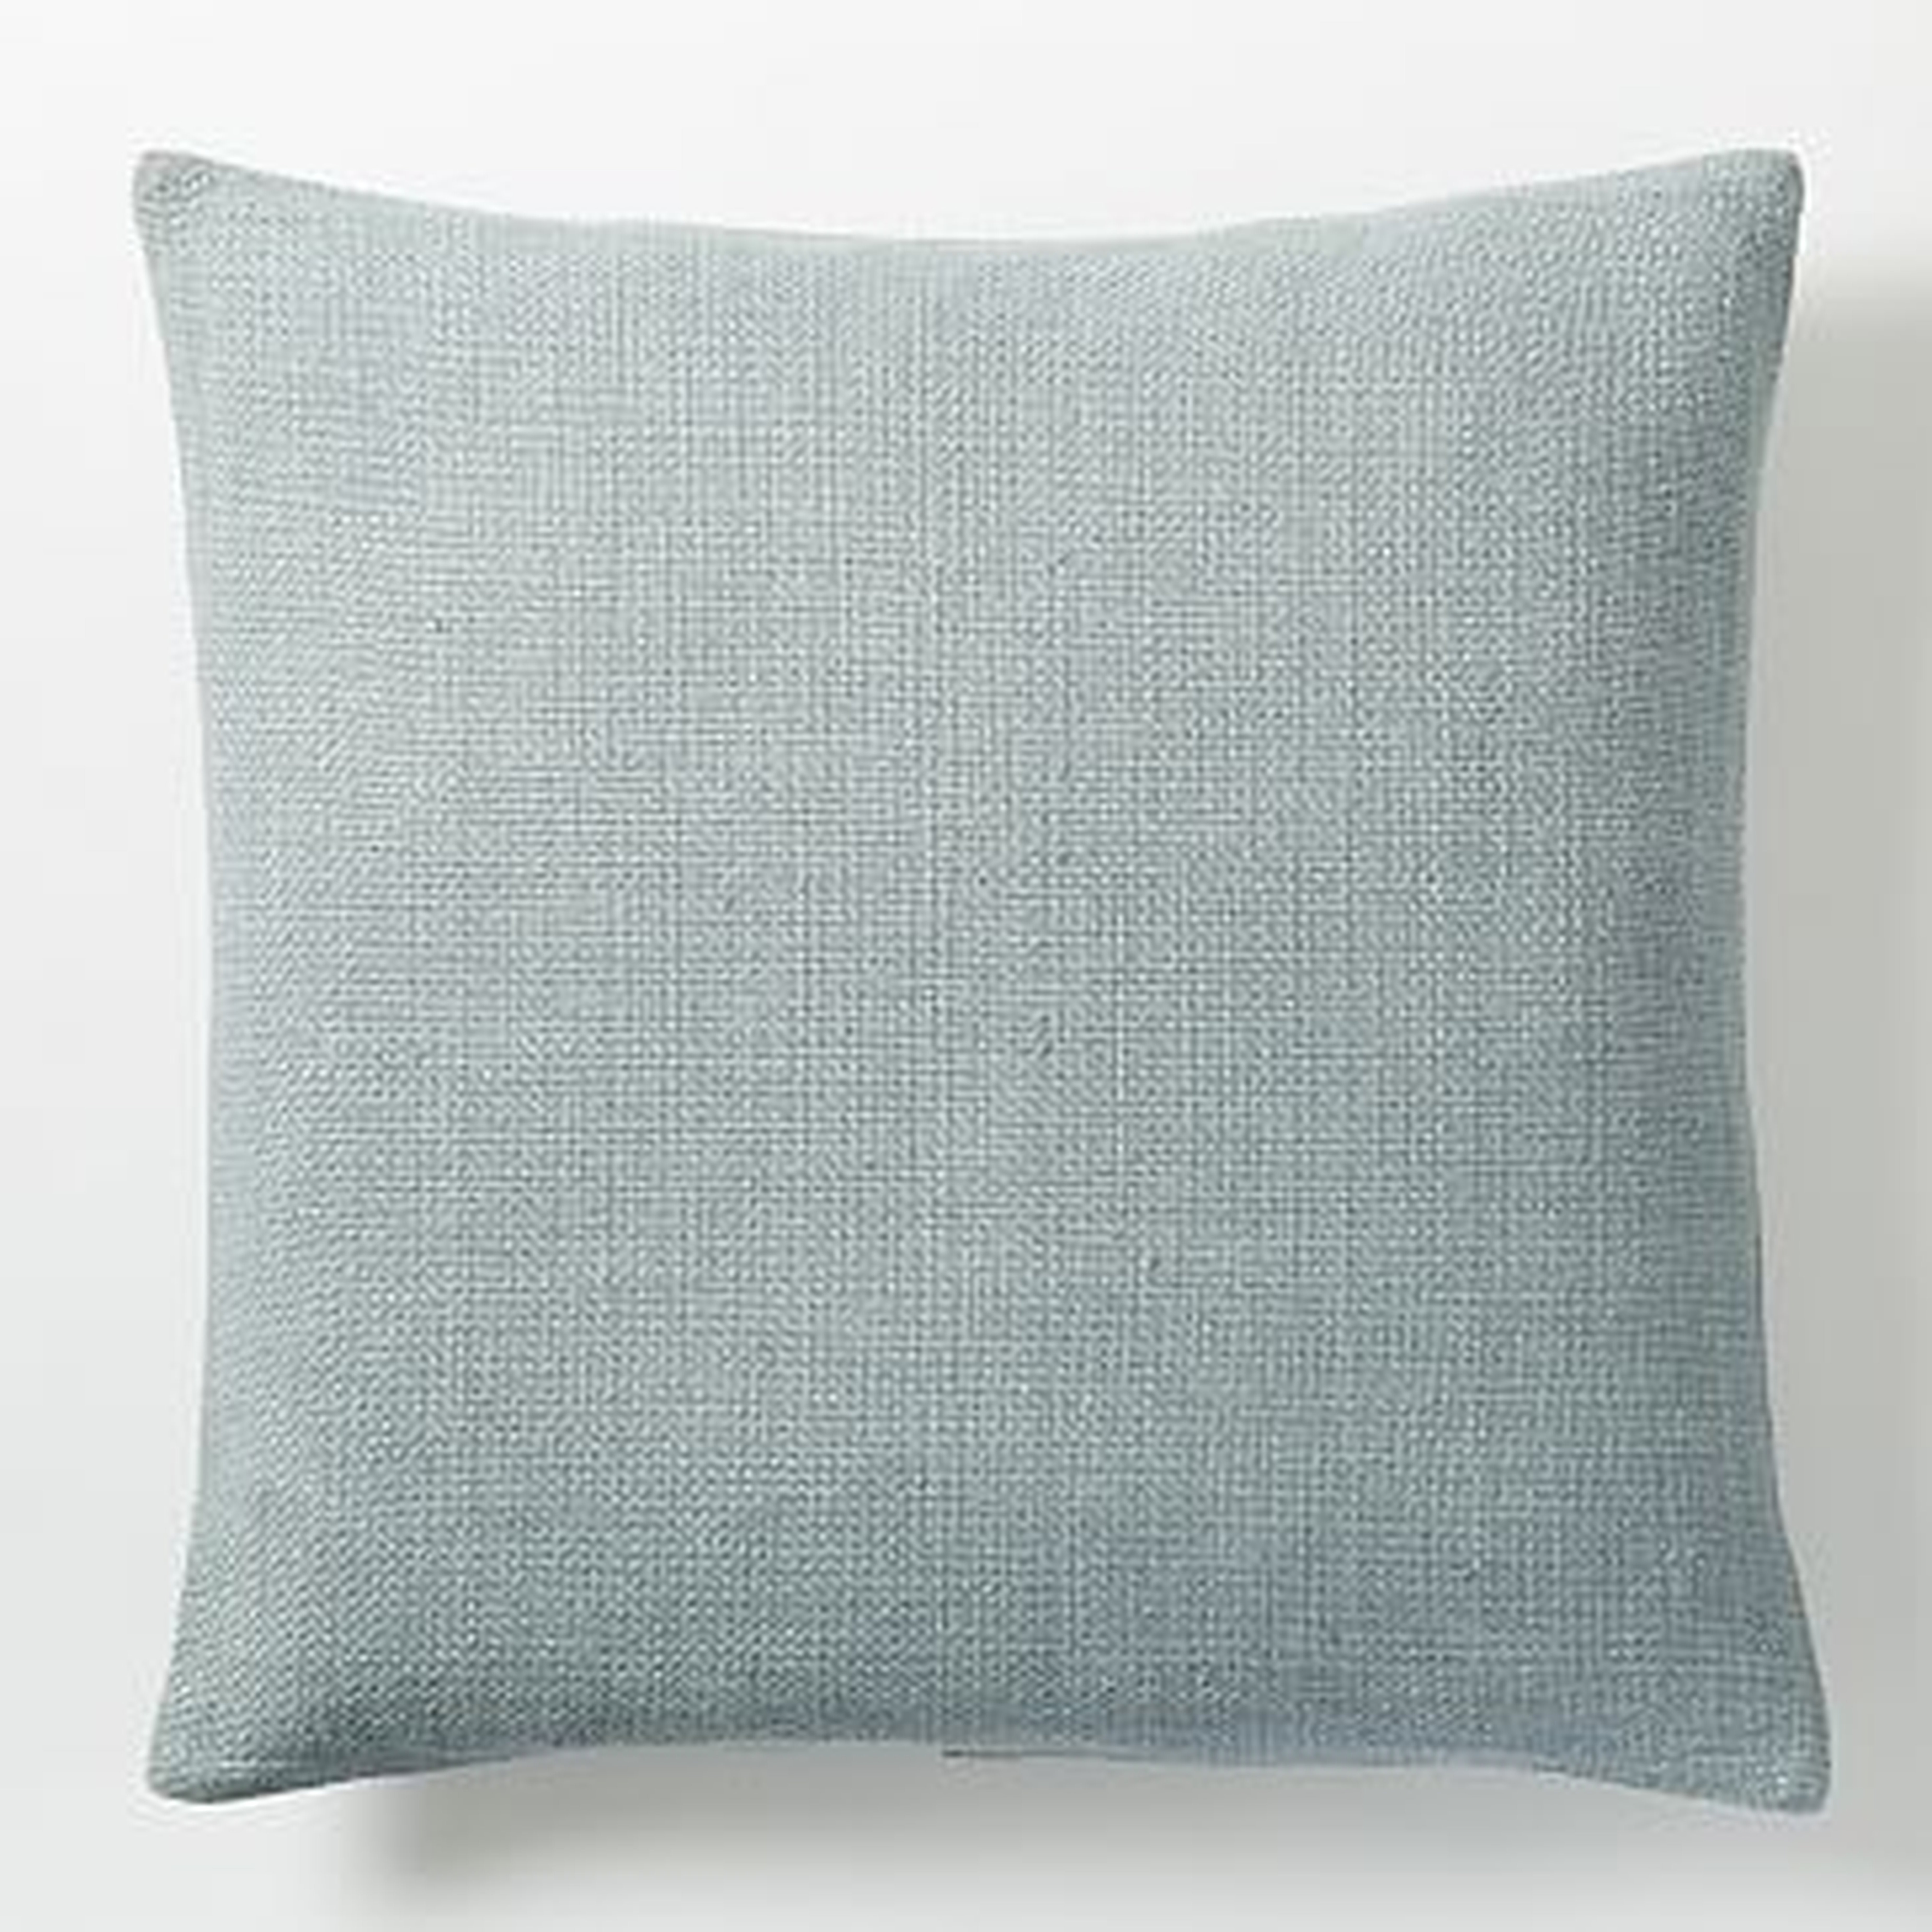 Silk Handloomed Pillow Cover, 20"x20", Moonstone - West Elm